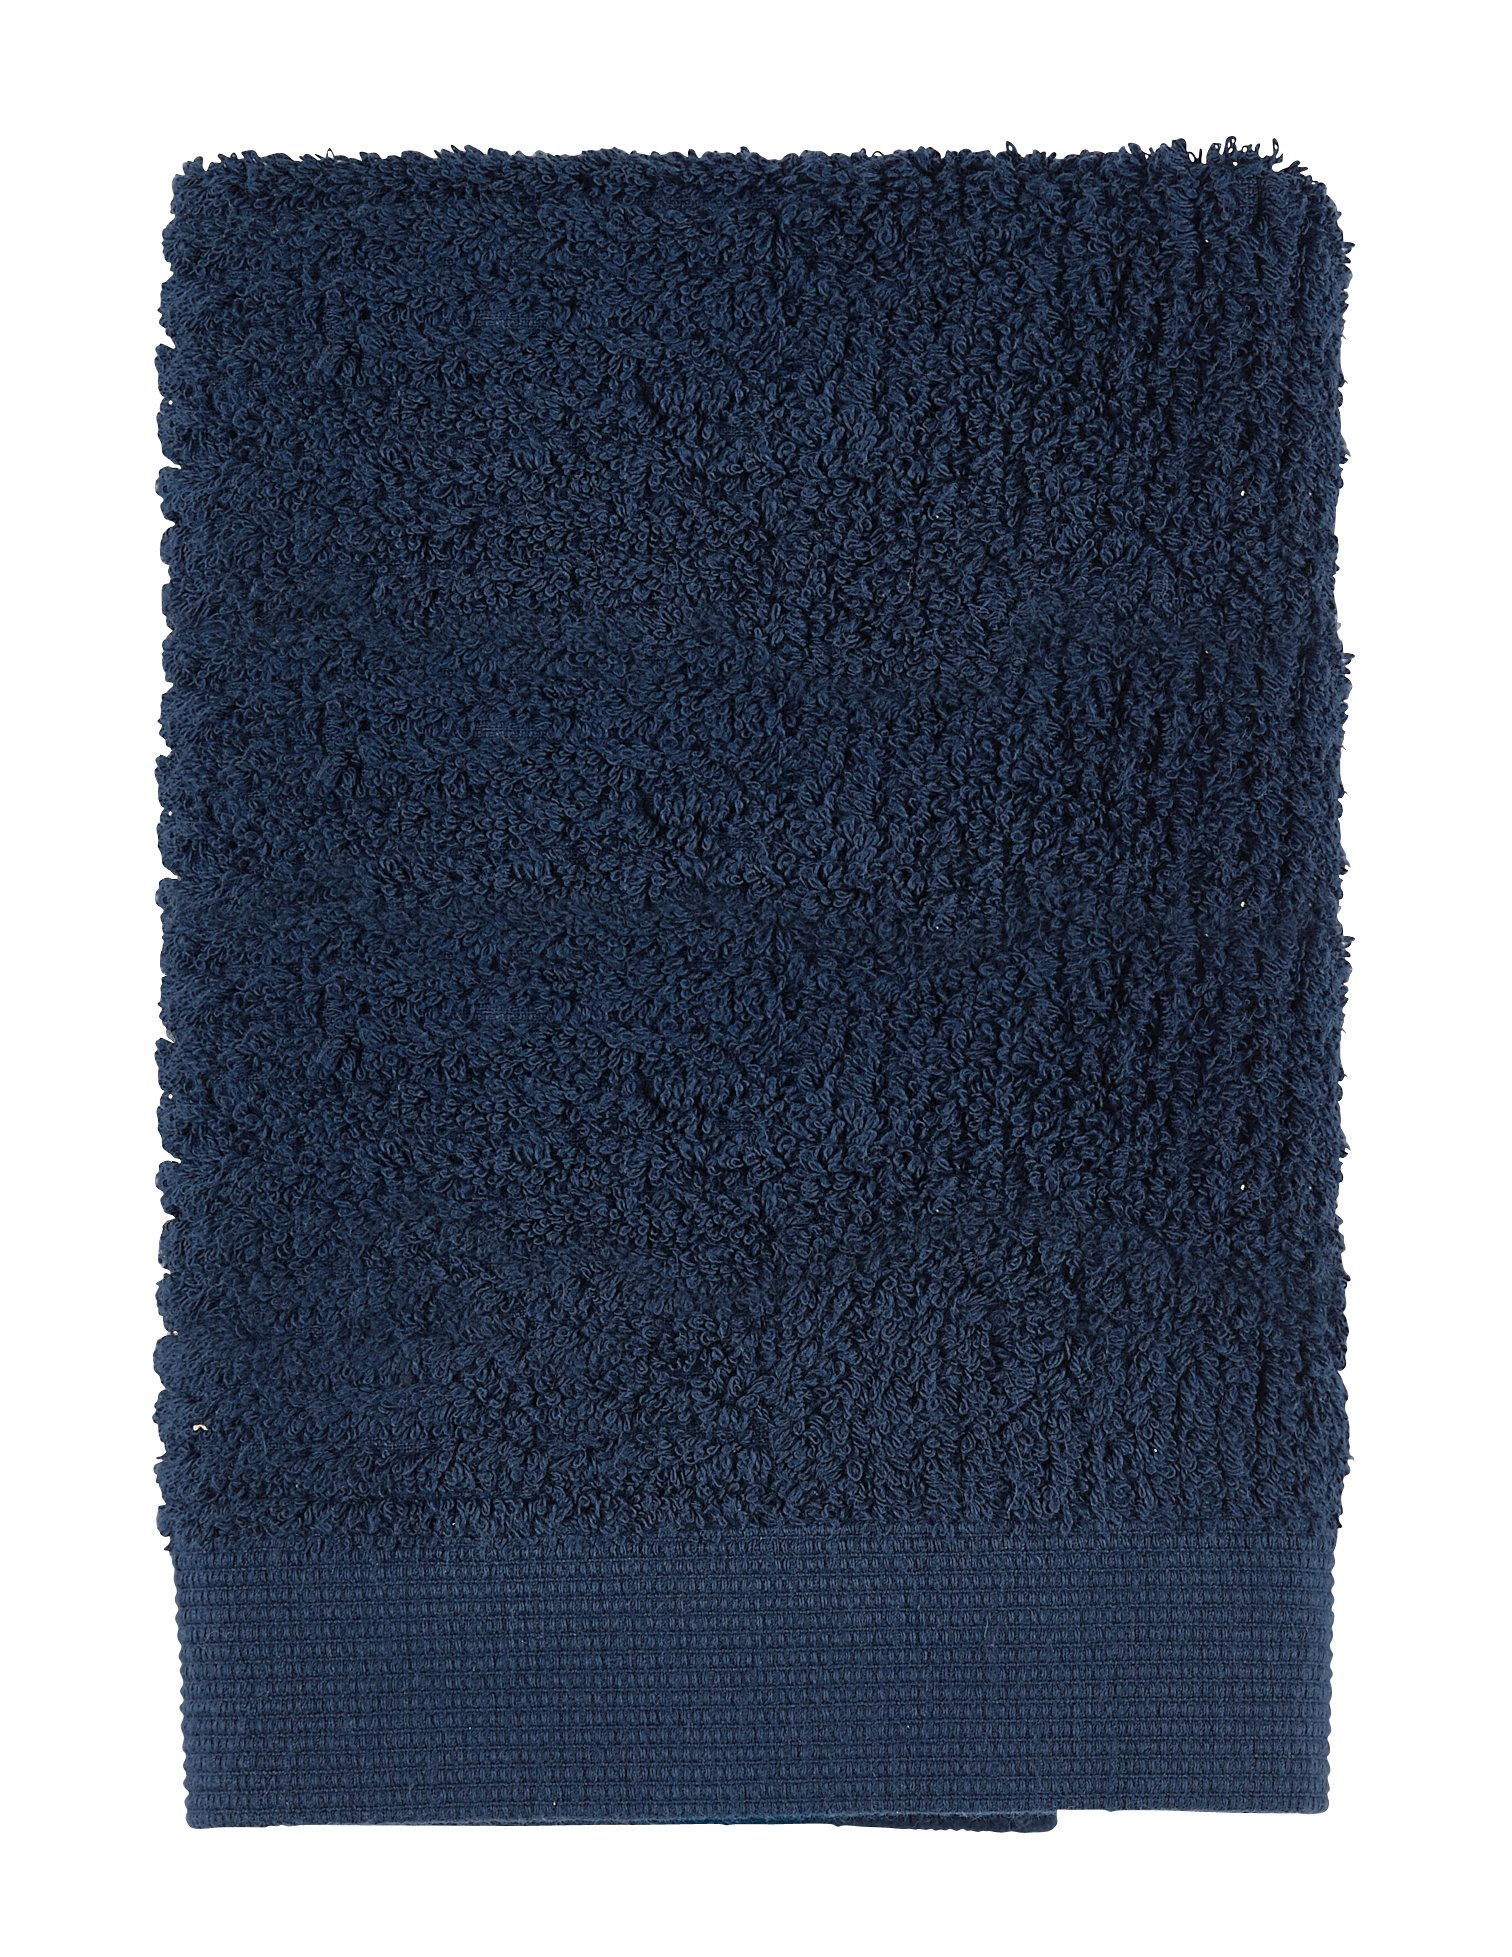 Zone - Classic Towel 50 x 70 cm - Dark Blue (330115)